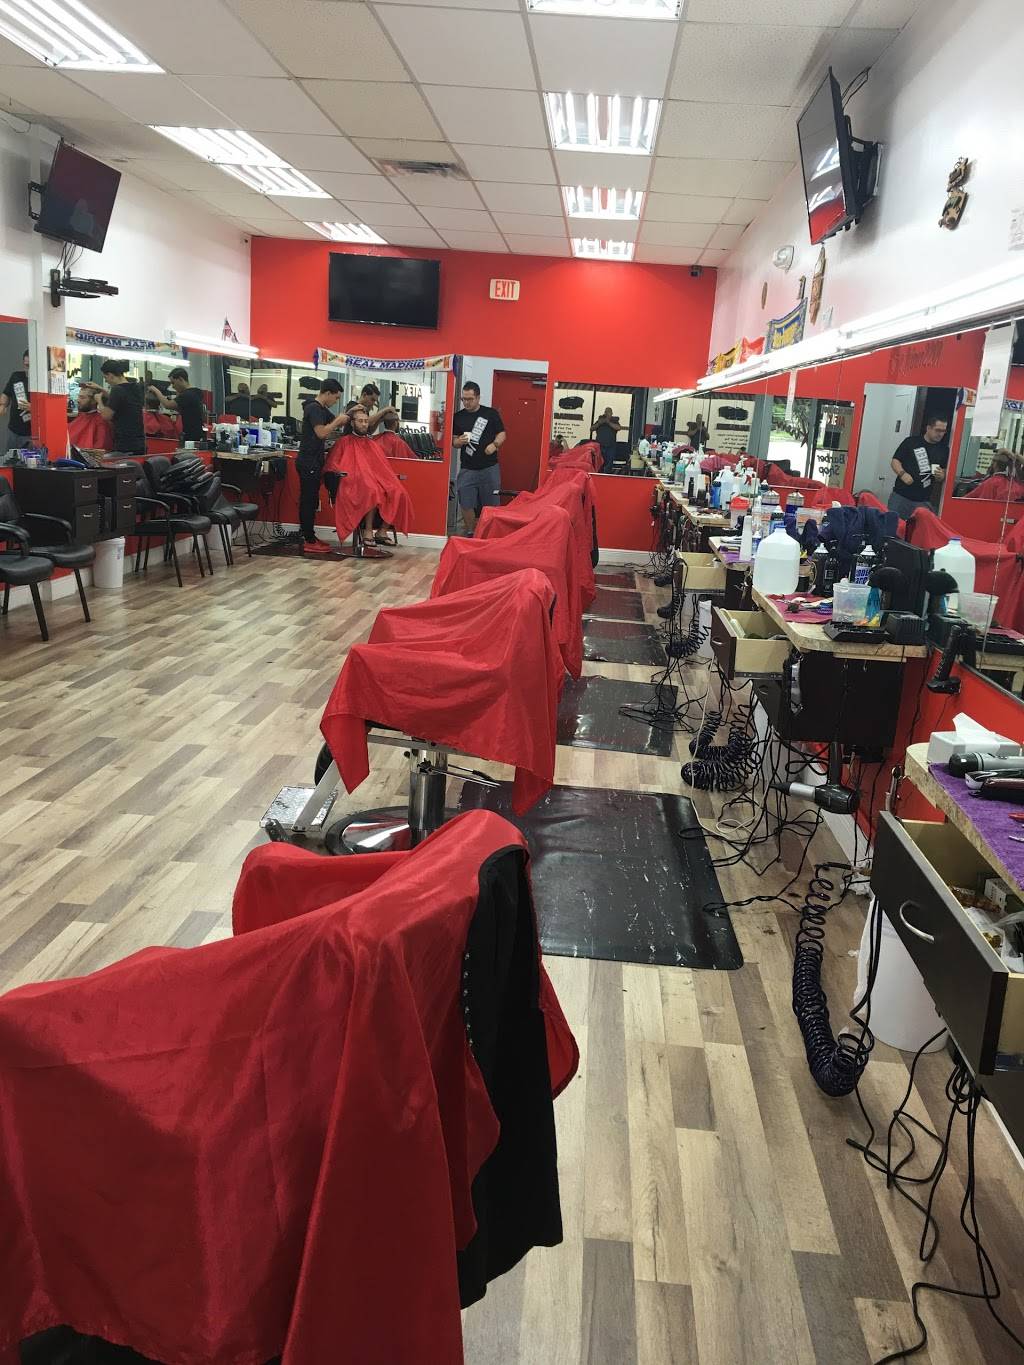 Alex xtreme barbershop "barberia" | 15649 SW 88th St #1103, Miami, FL 33196, USA | Phone: (305) 382-3001